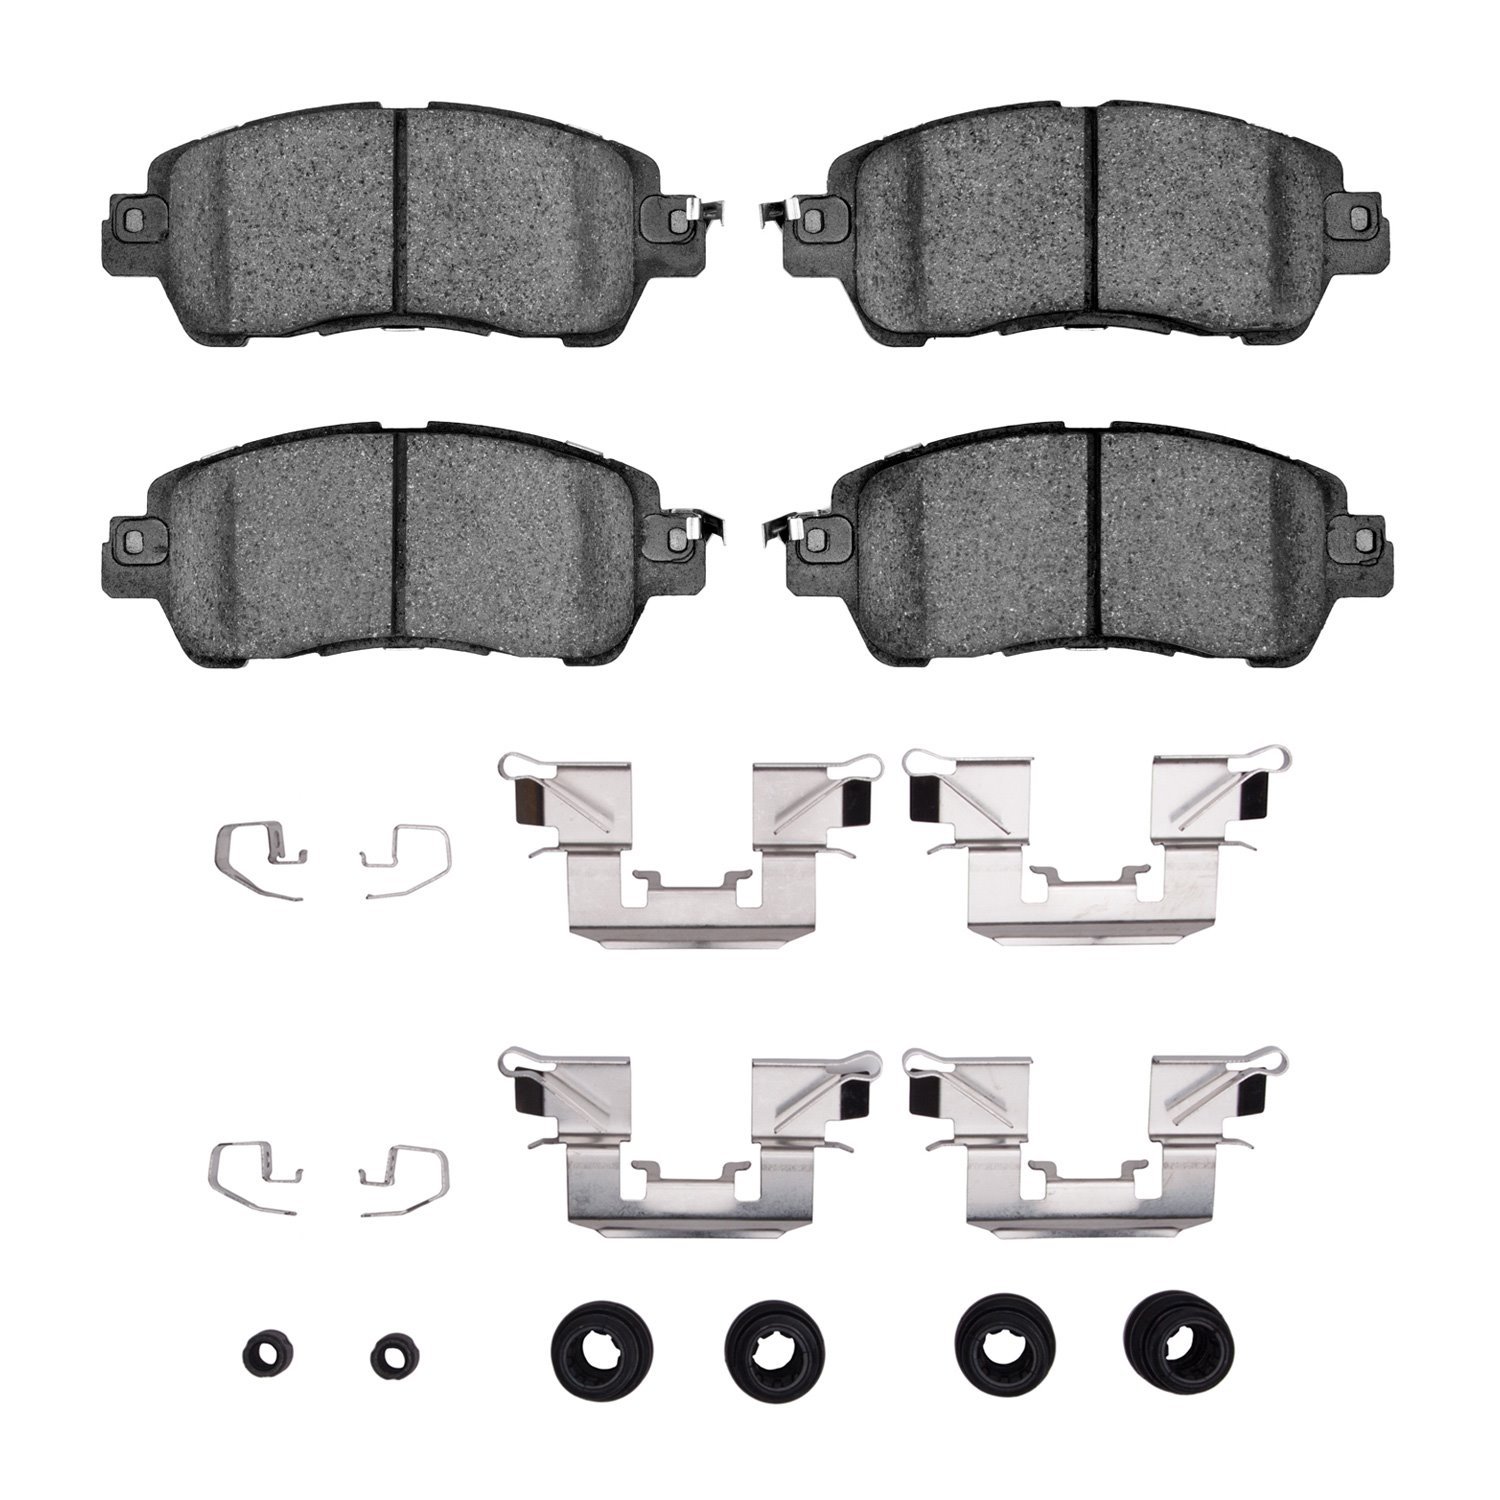 1310-1852-01 3000-Series Ceramic Brake Pads & Hardware Kit, 2016-2020 Multiple Makes/Models, Position: Front